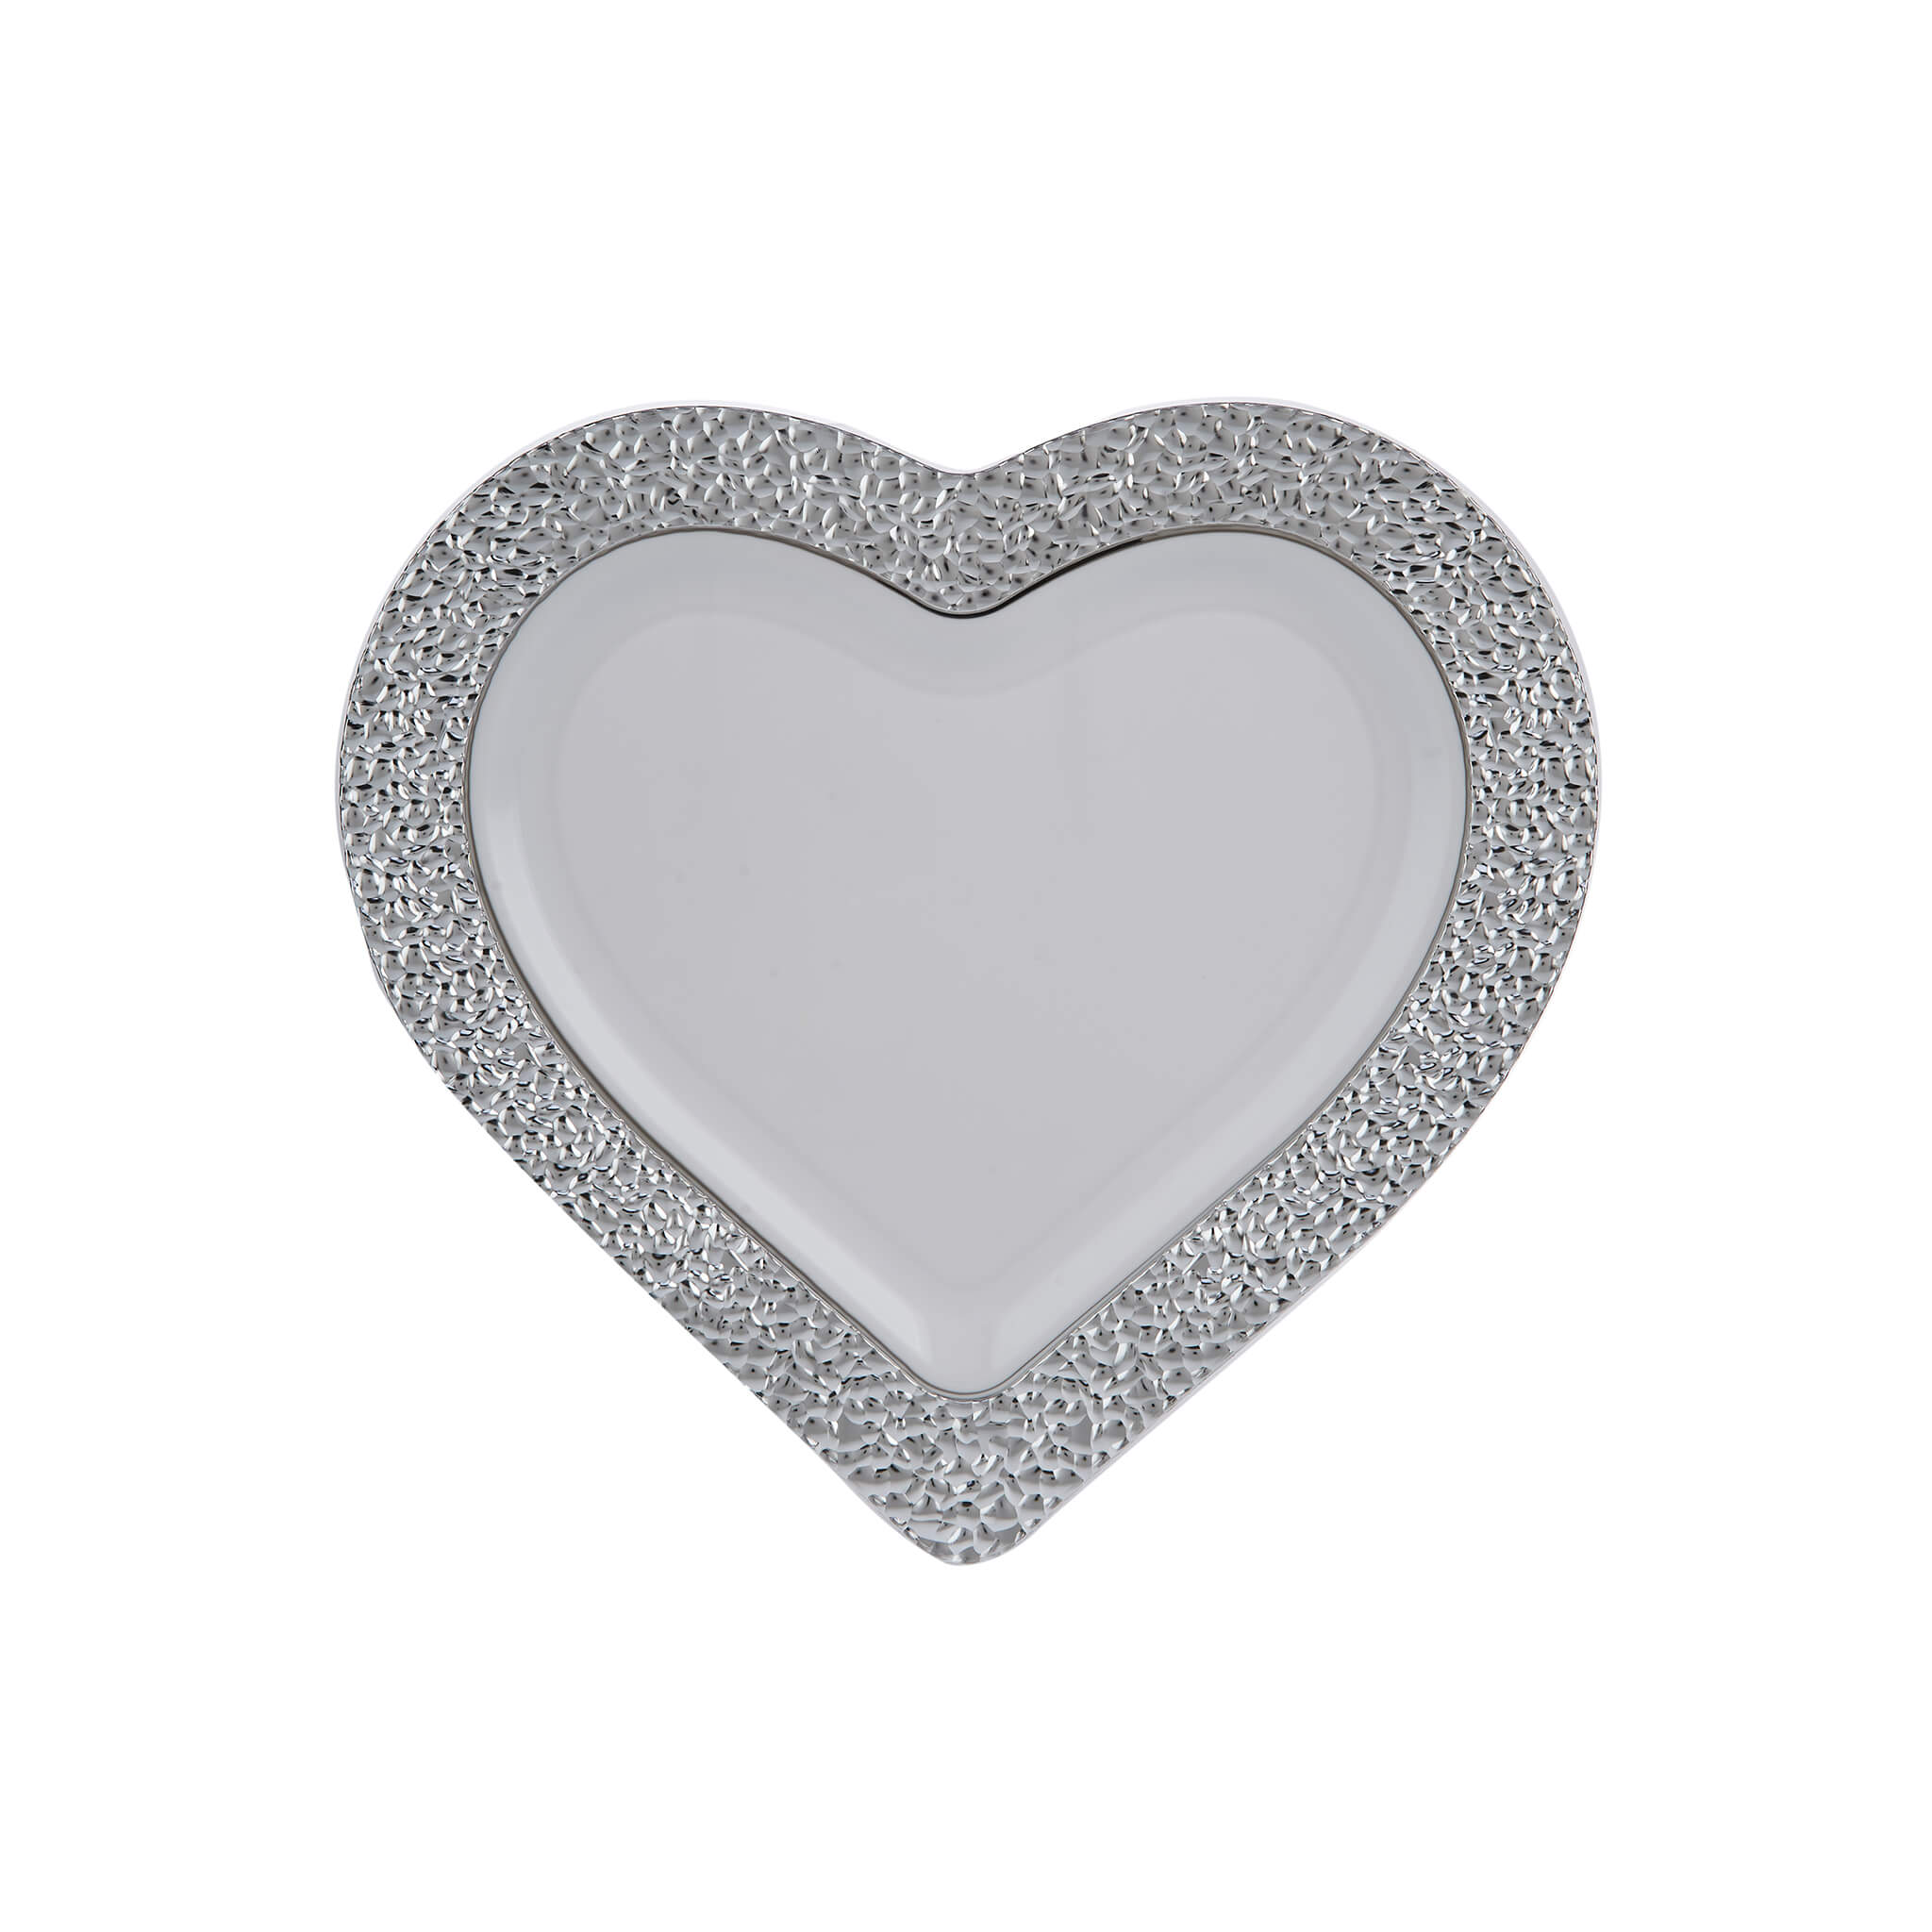 Premium Design Heart Plate with Silver Rim 10 Pieces